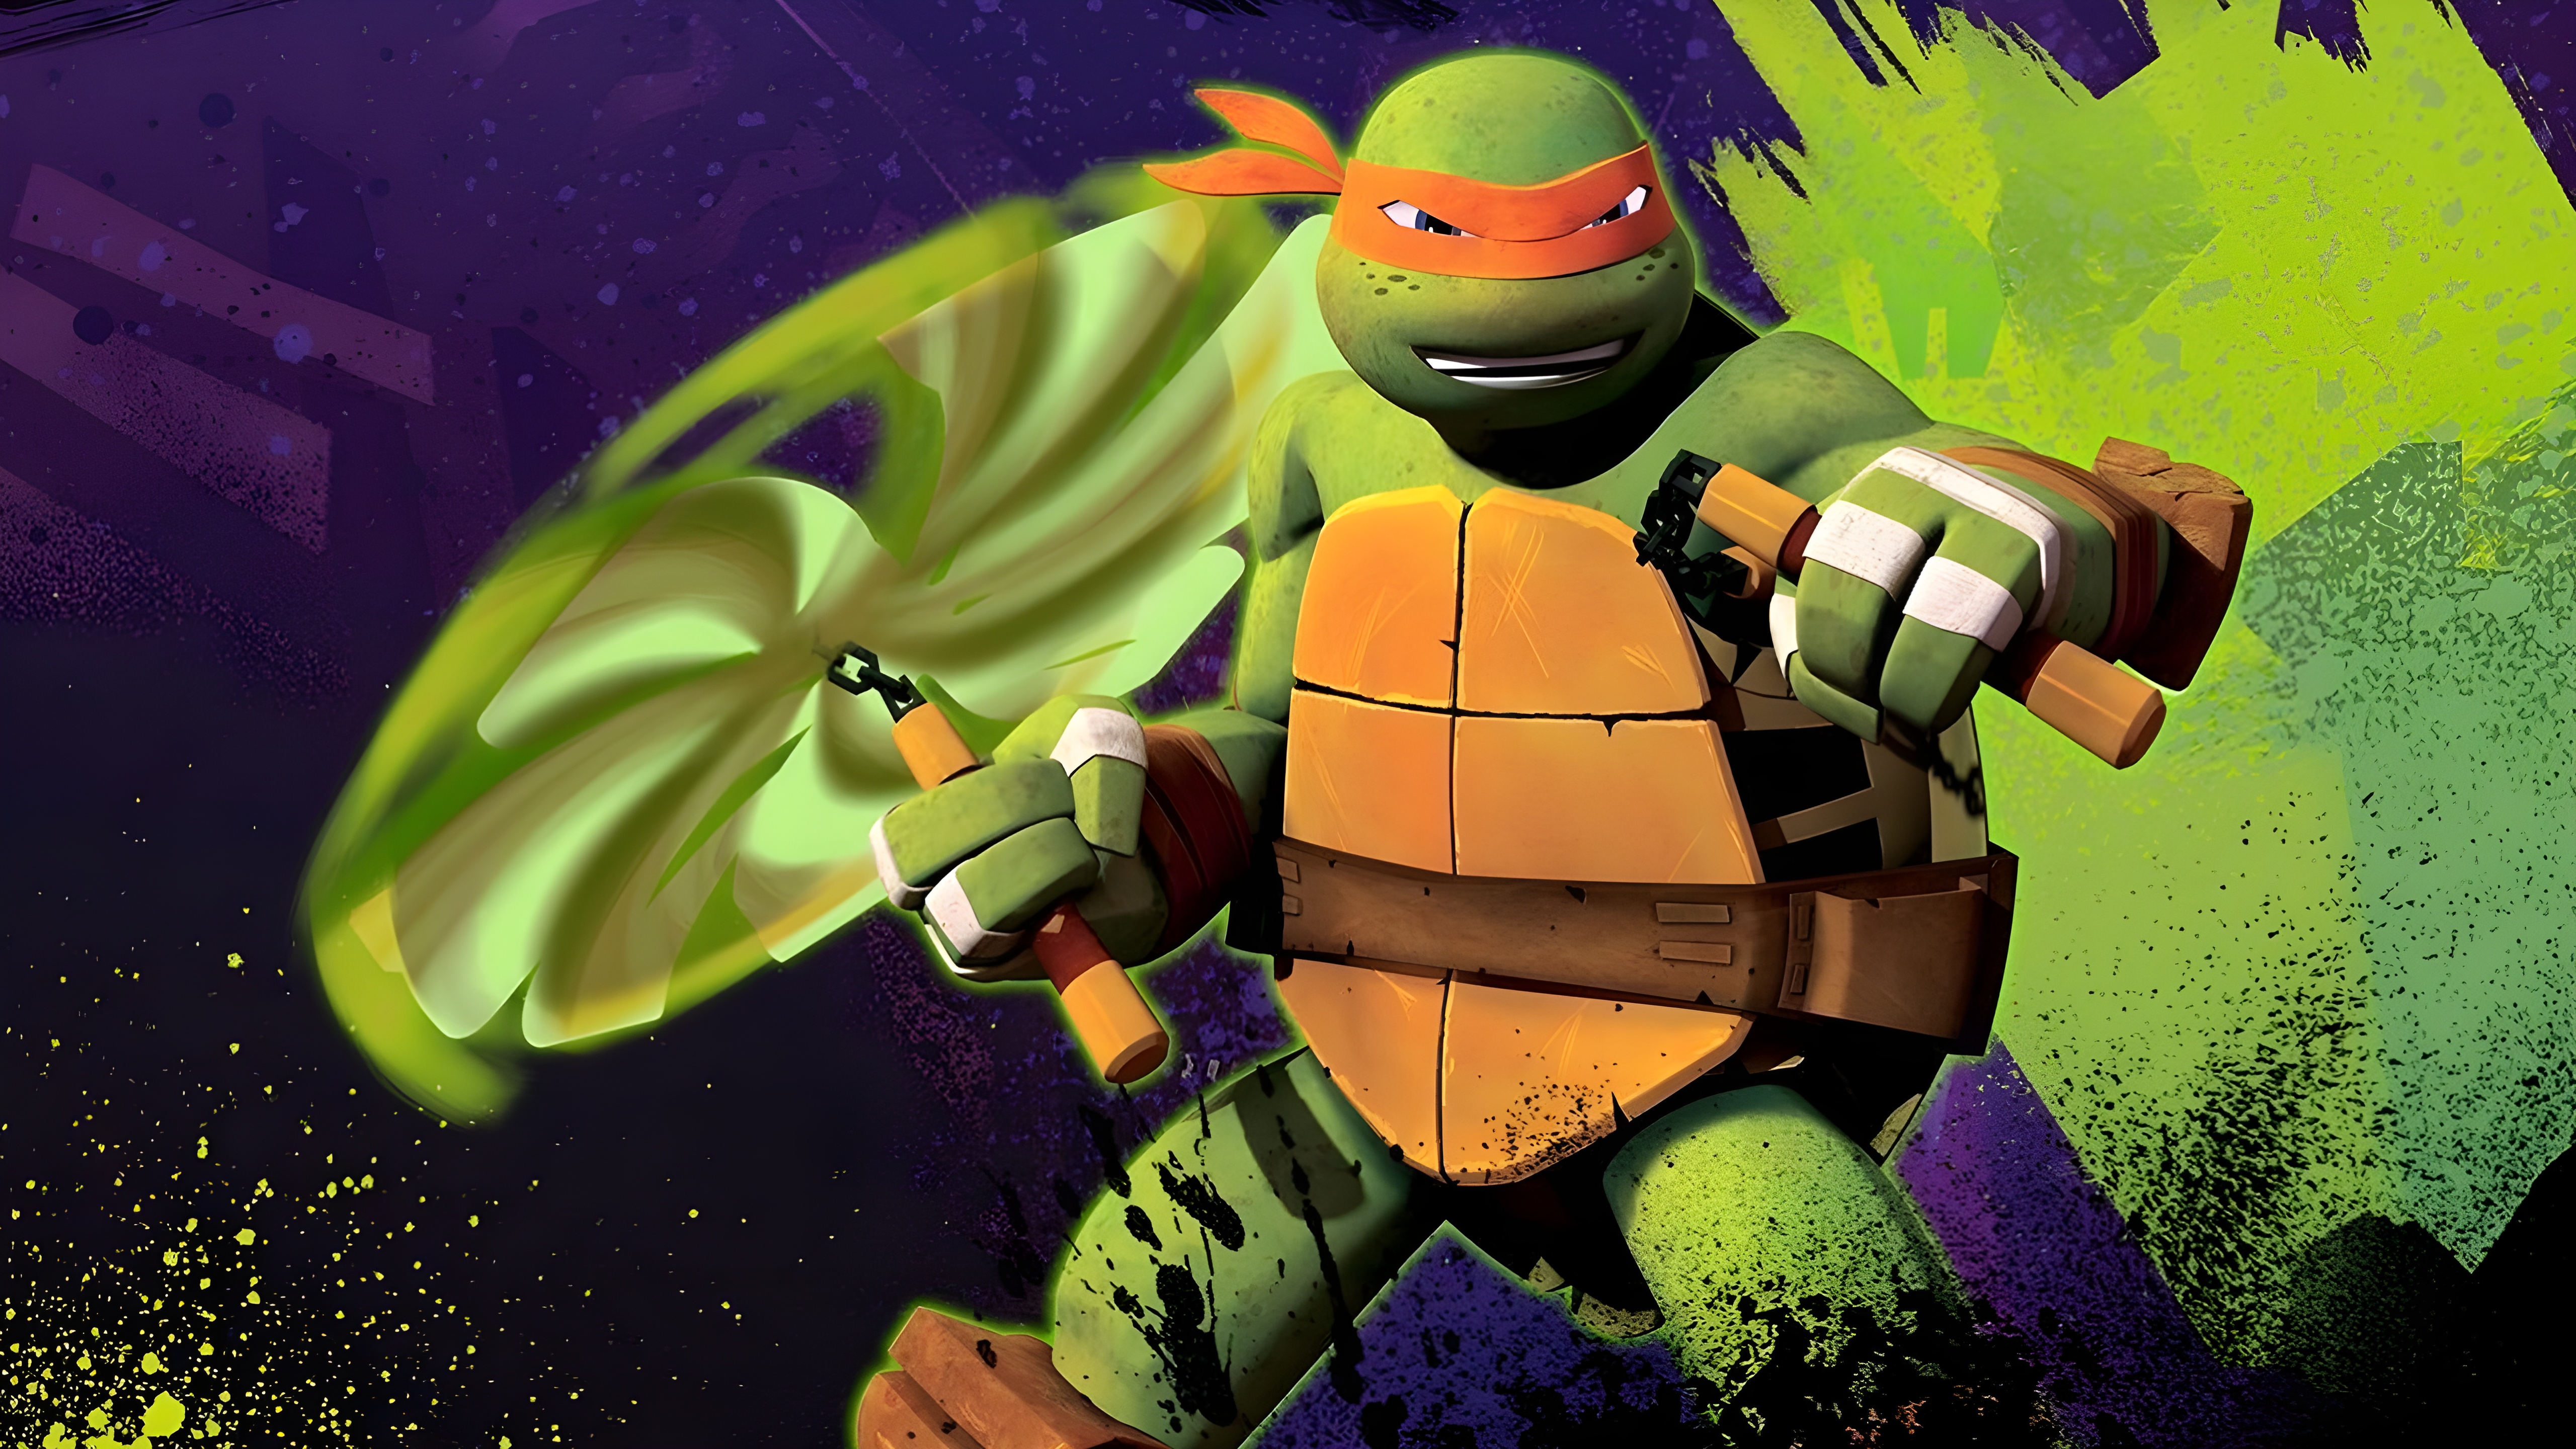 TV Show Teenage Mutant Ninja Turtles HD Wallpaper | Background Image